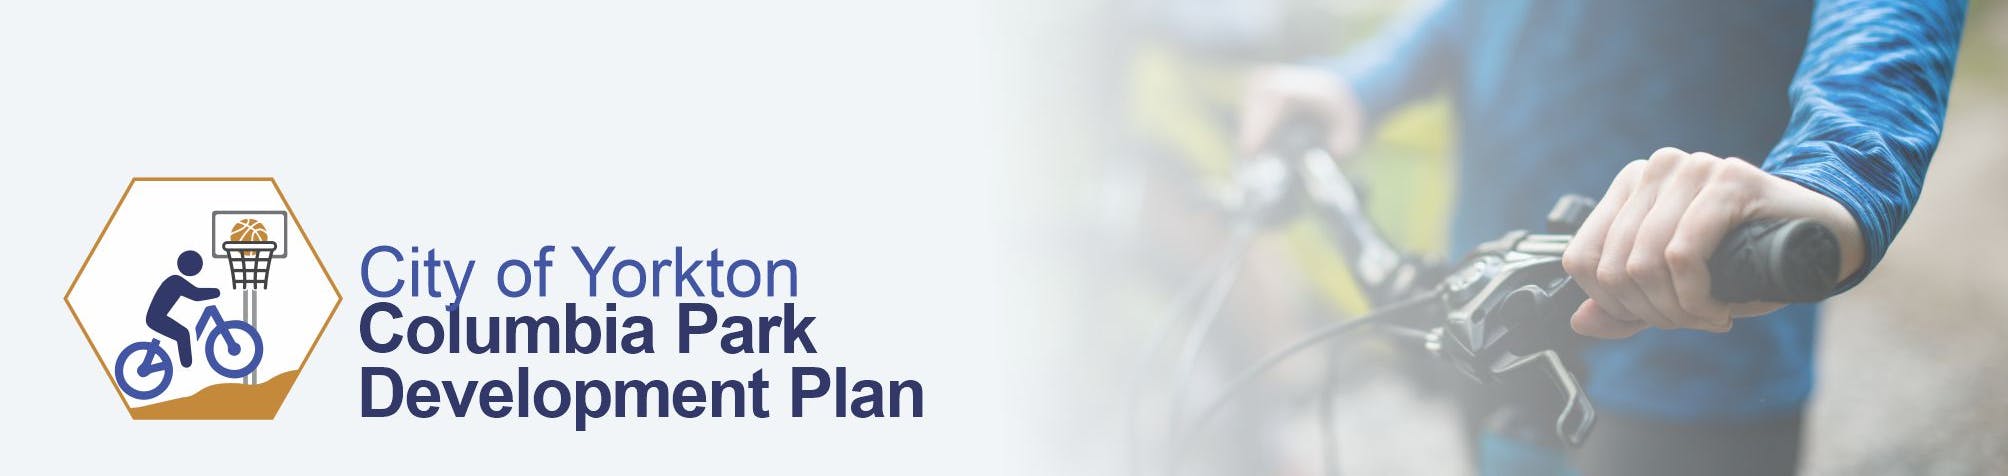 City of Yorkton Columbia Park Development Plan